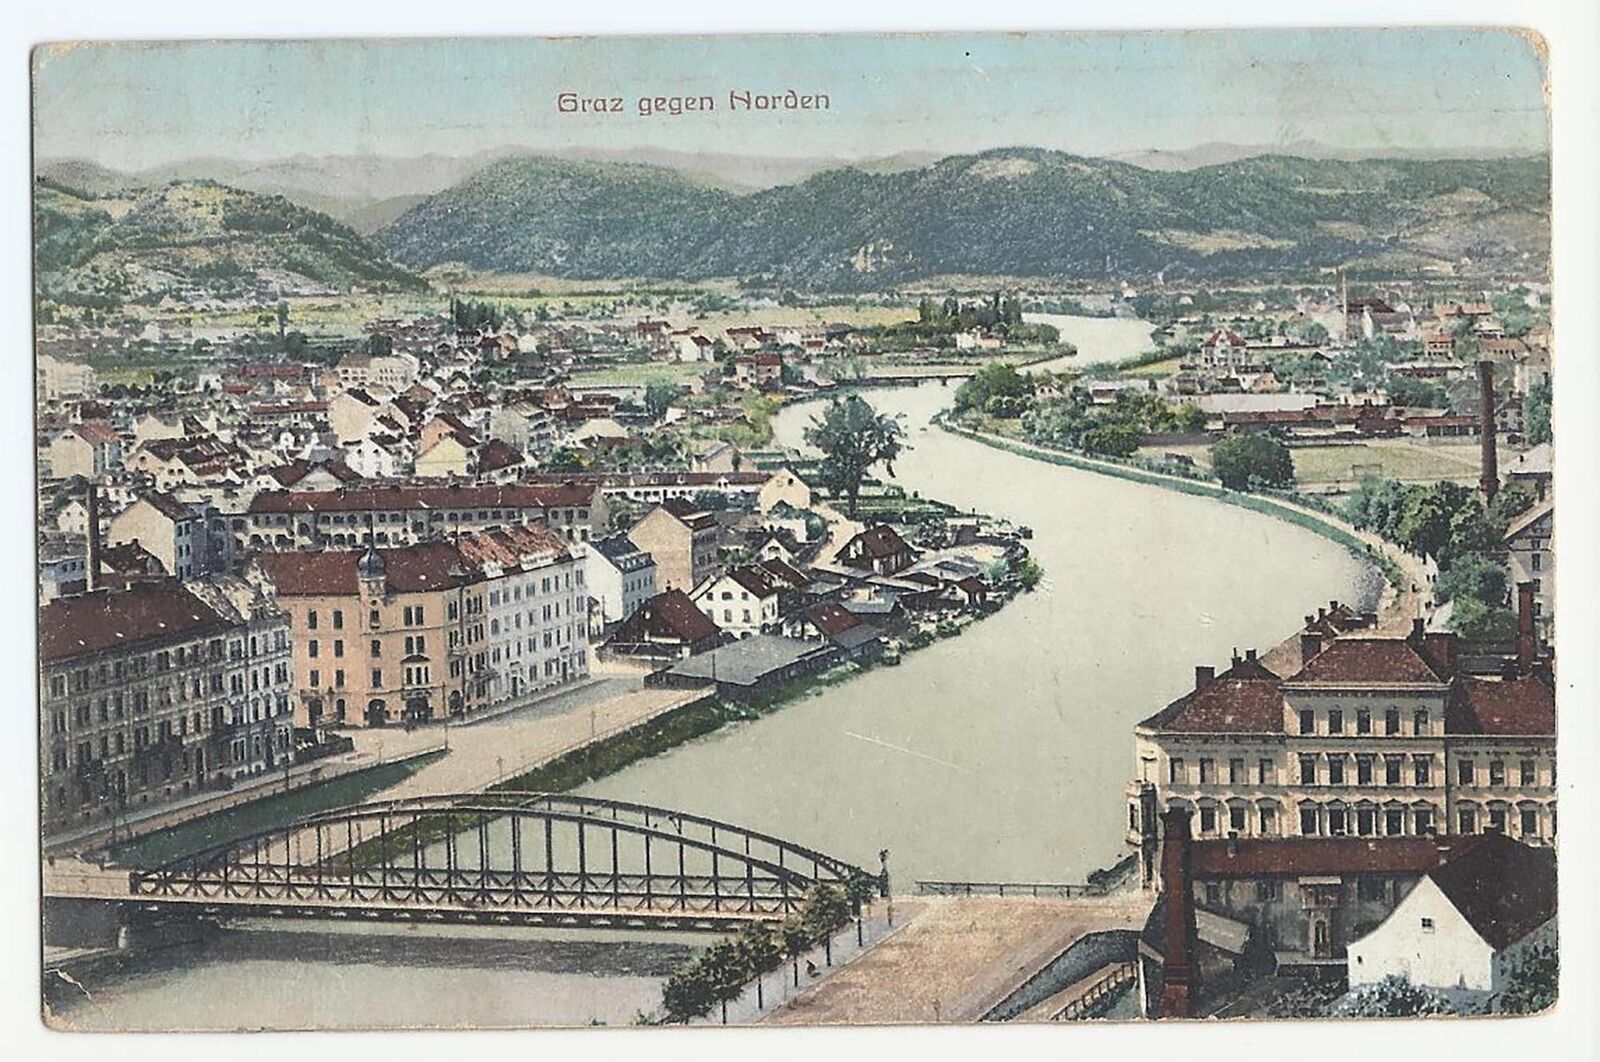 Graz Austria, Picture Postcard, View against North